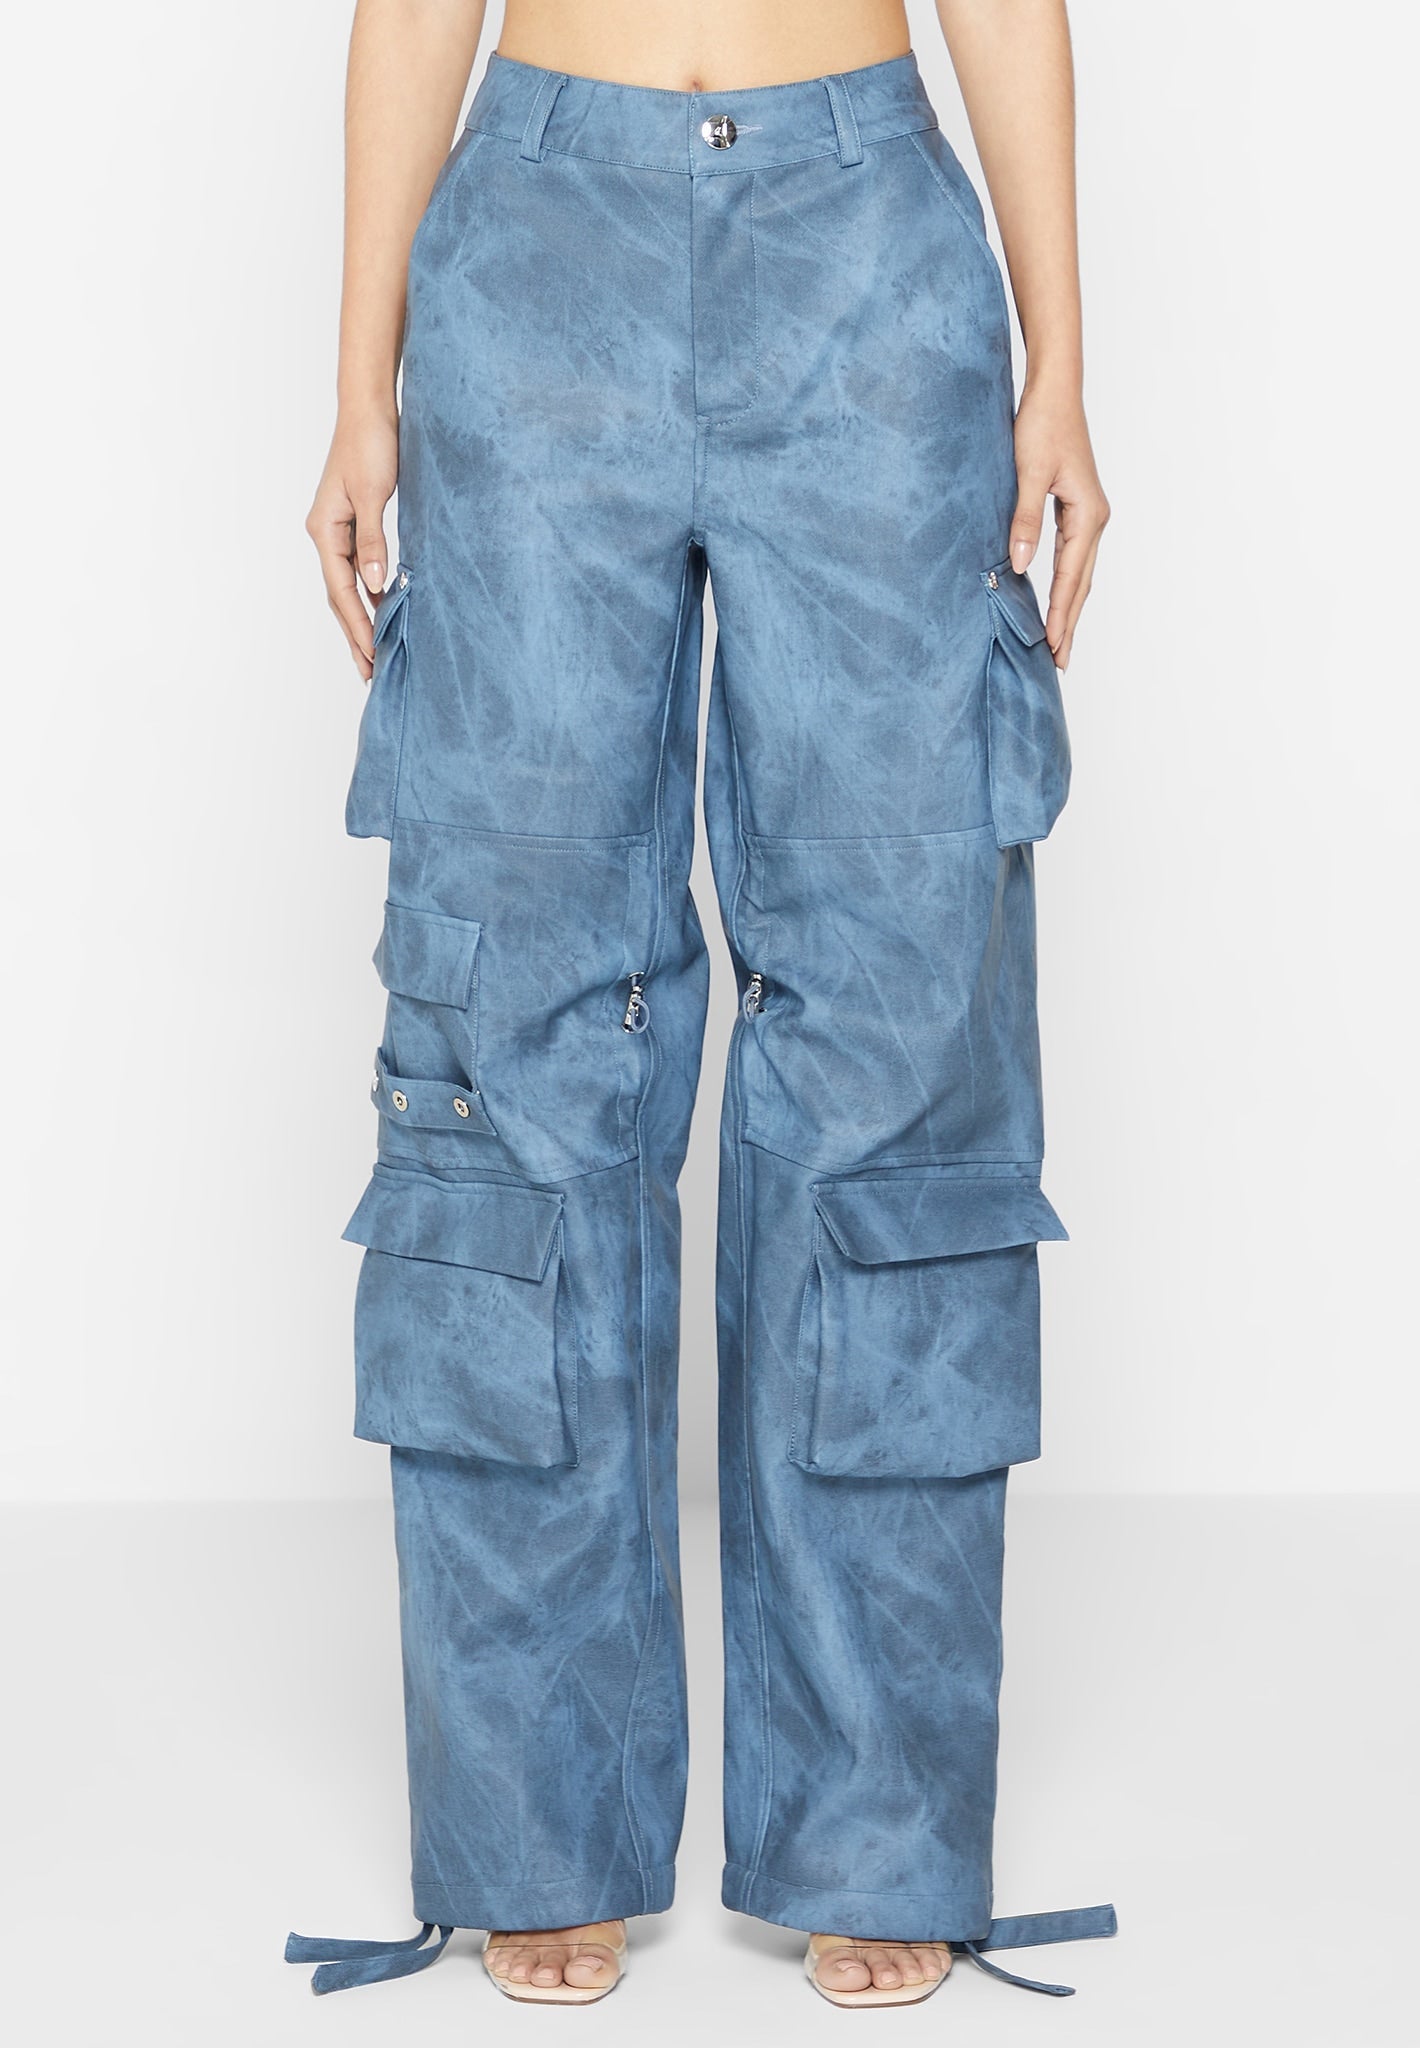 Women's blue Cargo Pants, Cargo Trousers Pants for Women